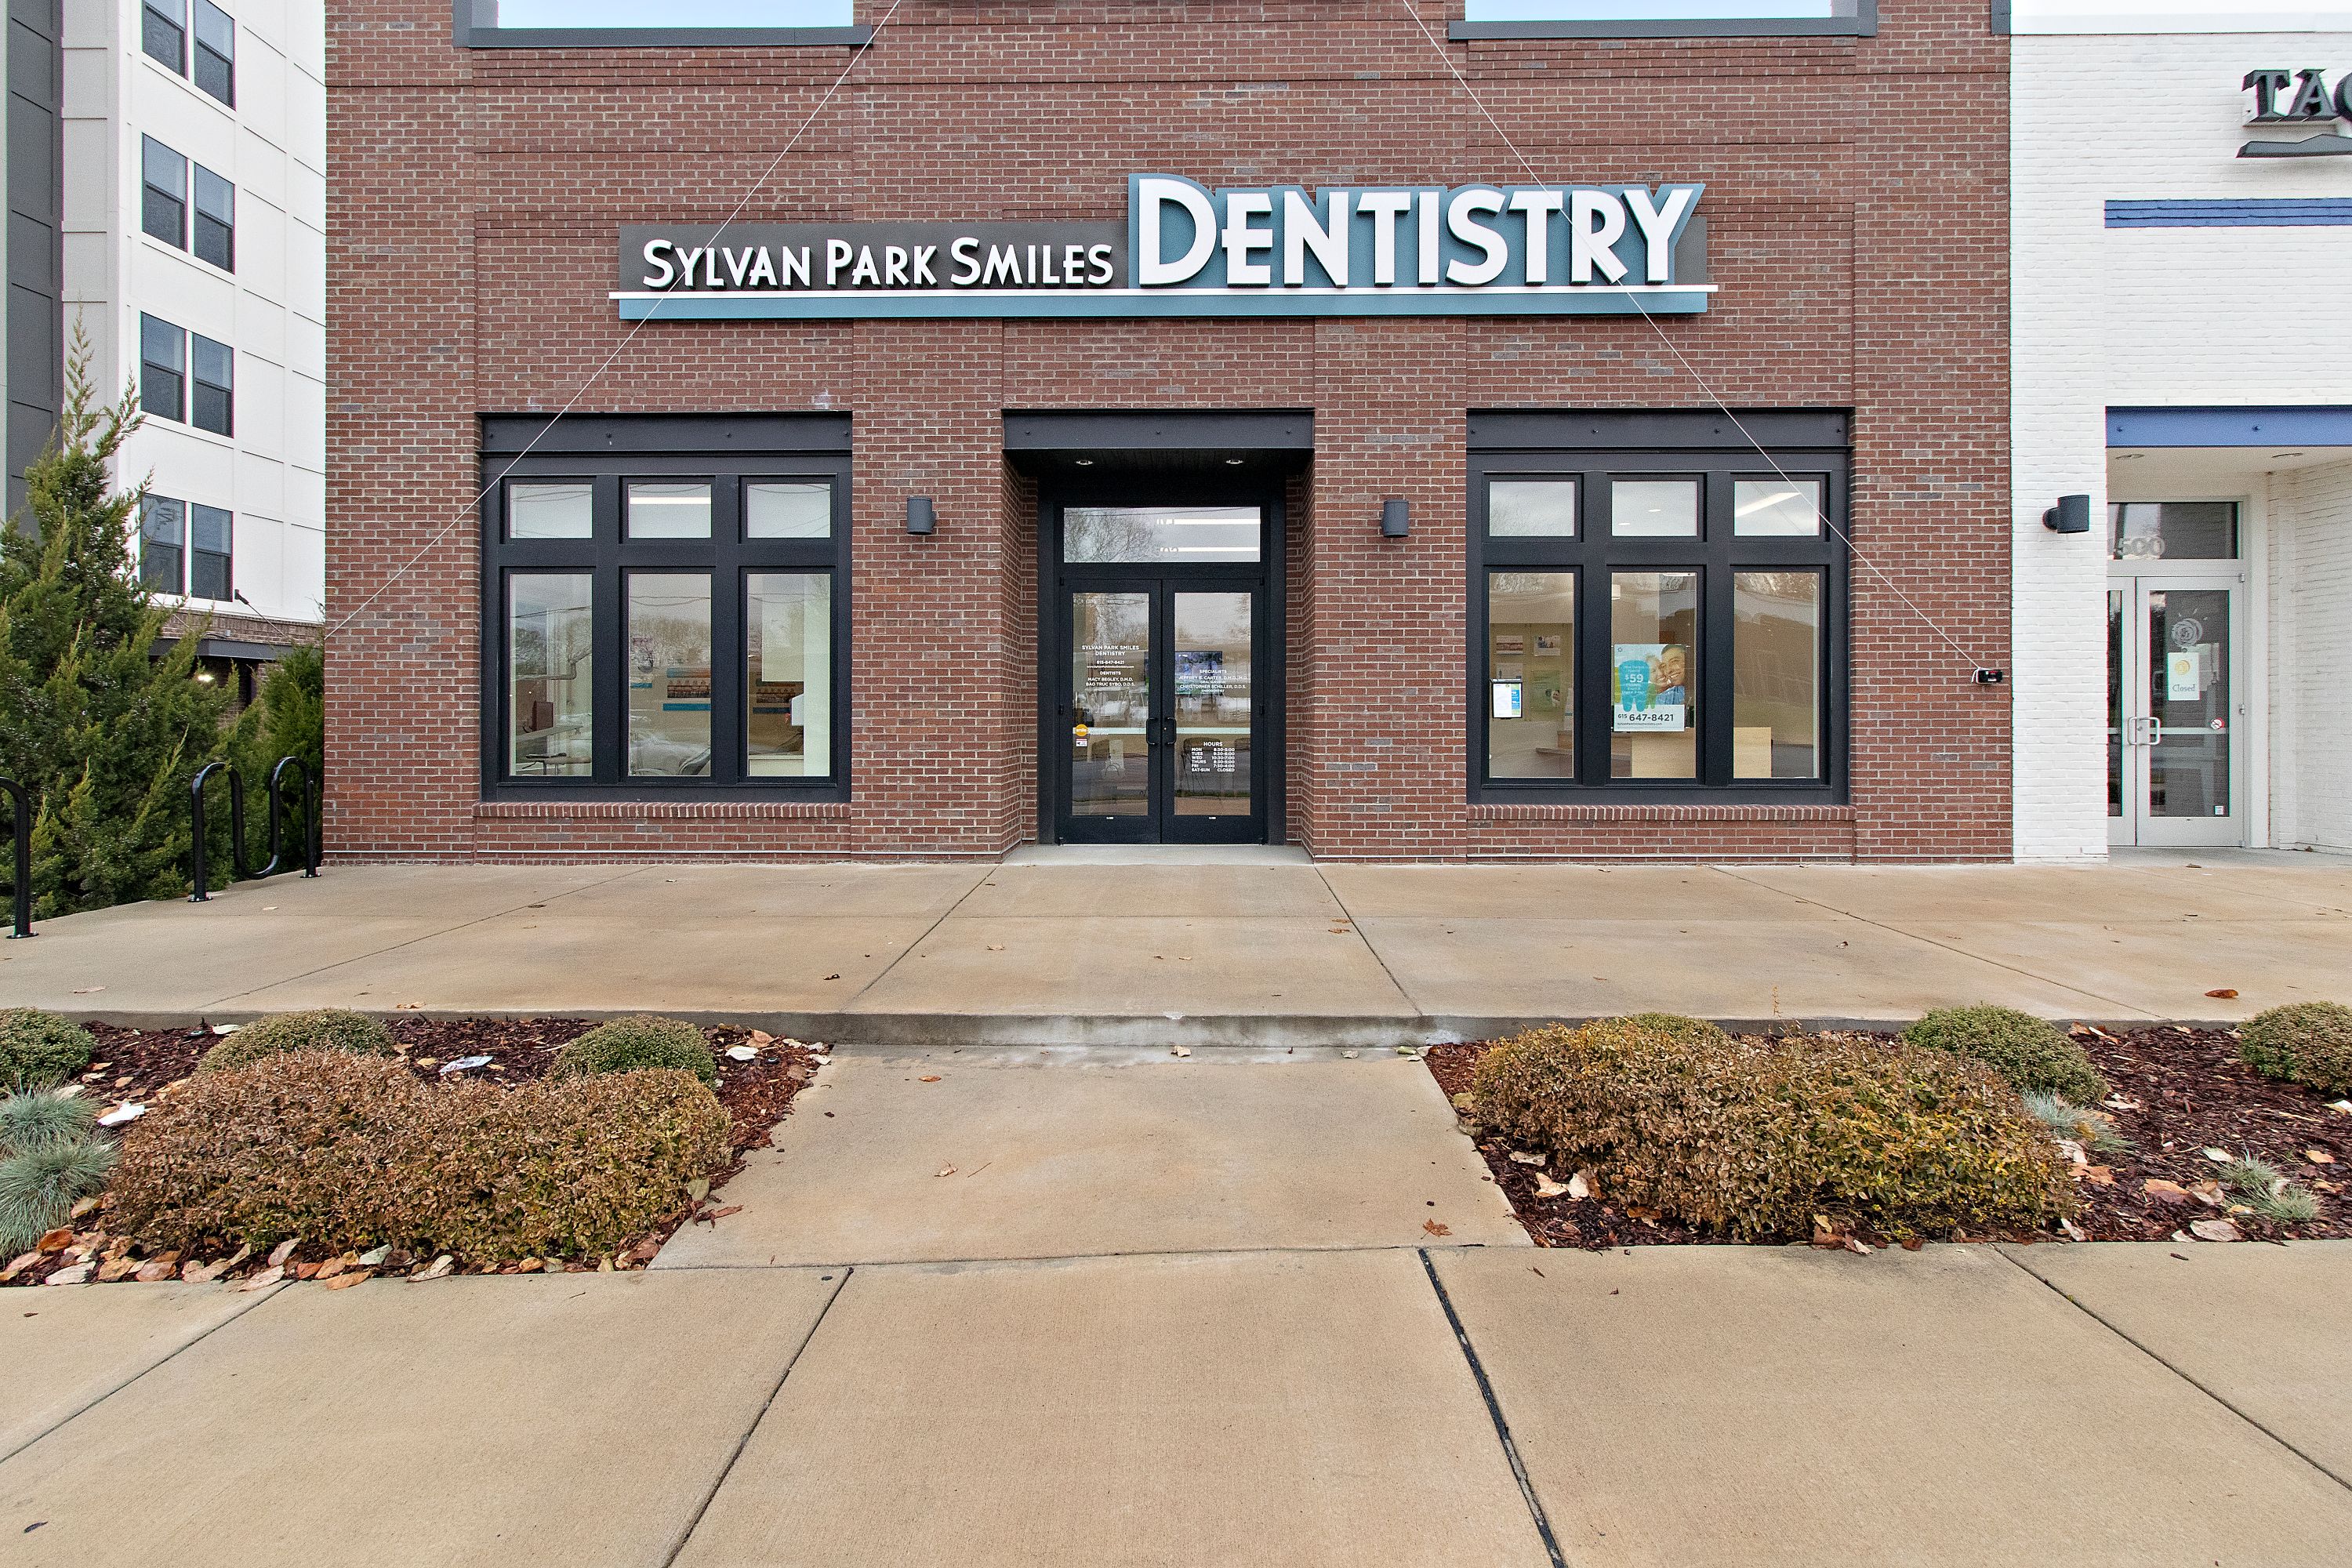 Sylvan Park Smiles Dentistry Nashville (615)647-8421